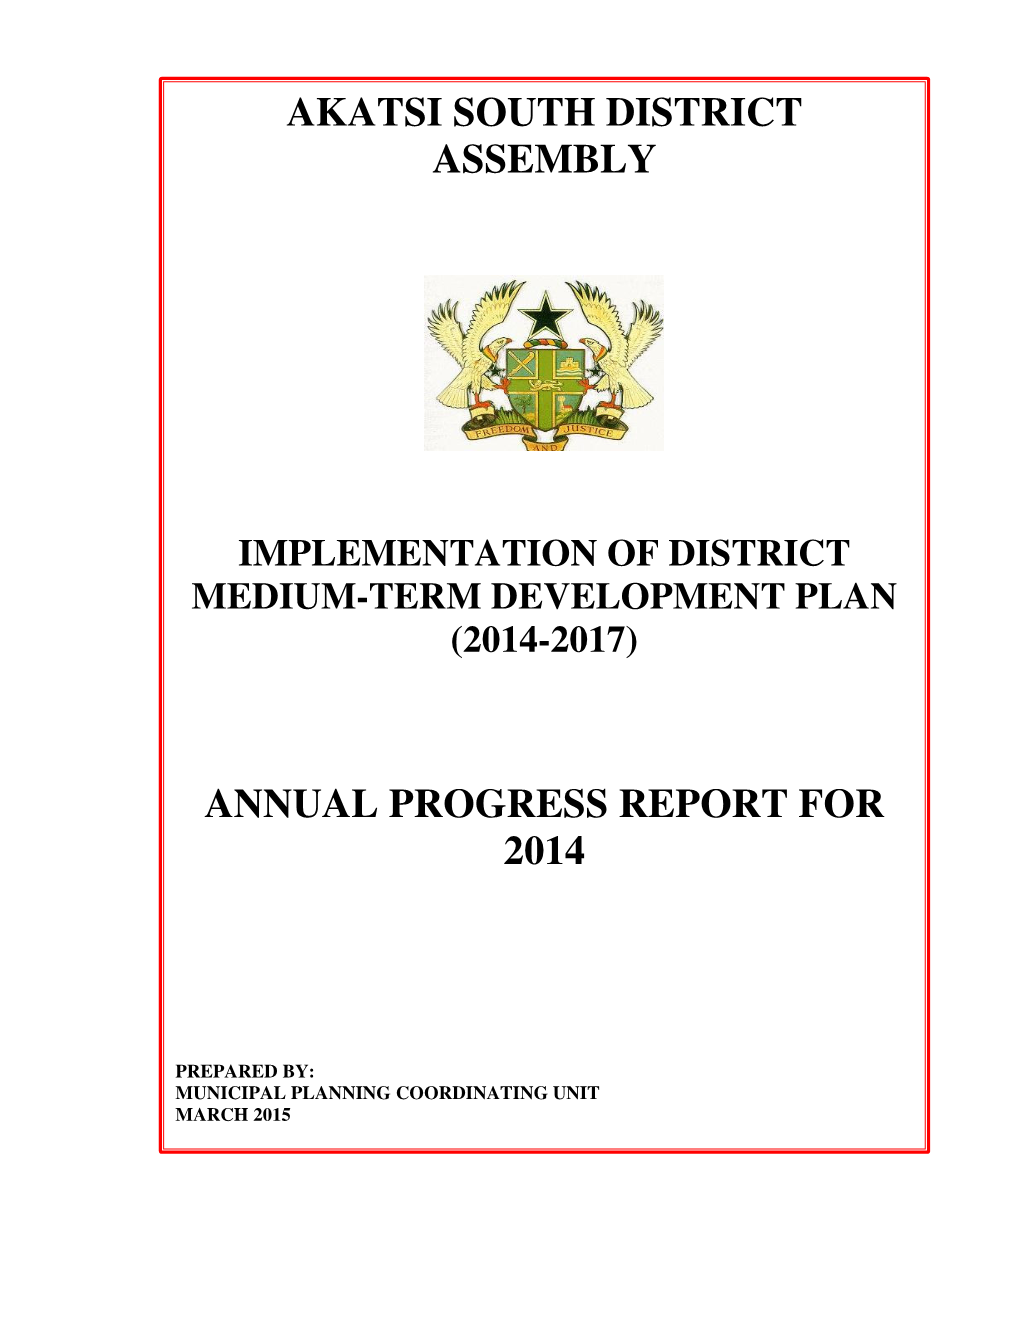 Akatsi South District Assembly Annual Progress